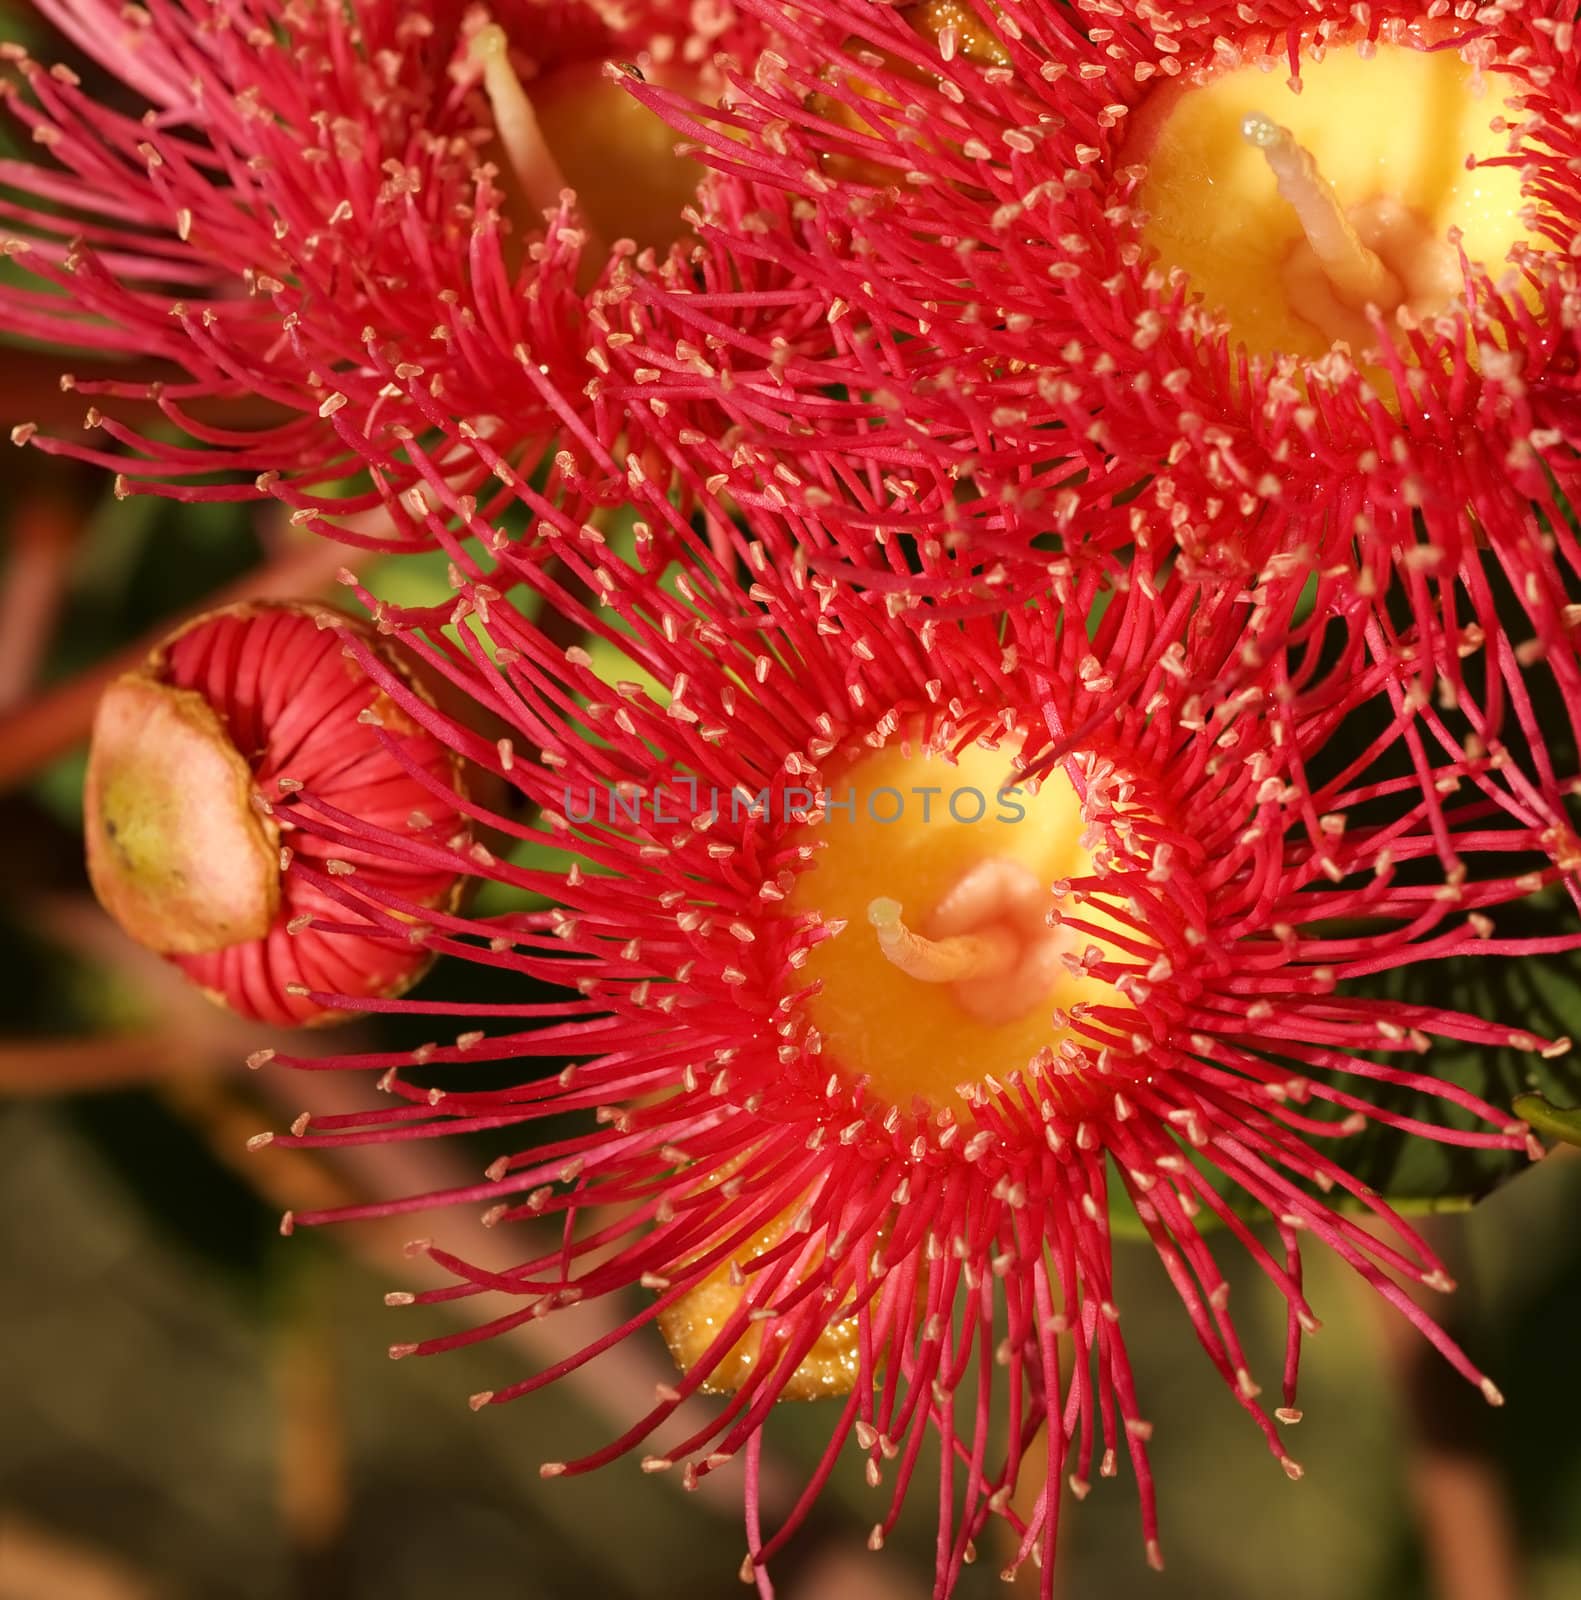 red flowers gum tree eucalyptus phytocarpa australian native with bud